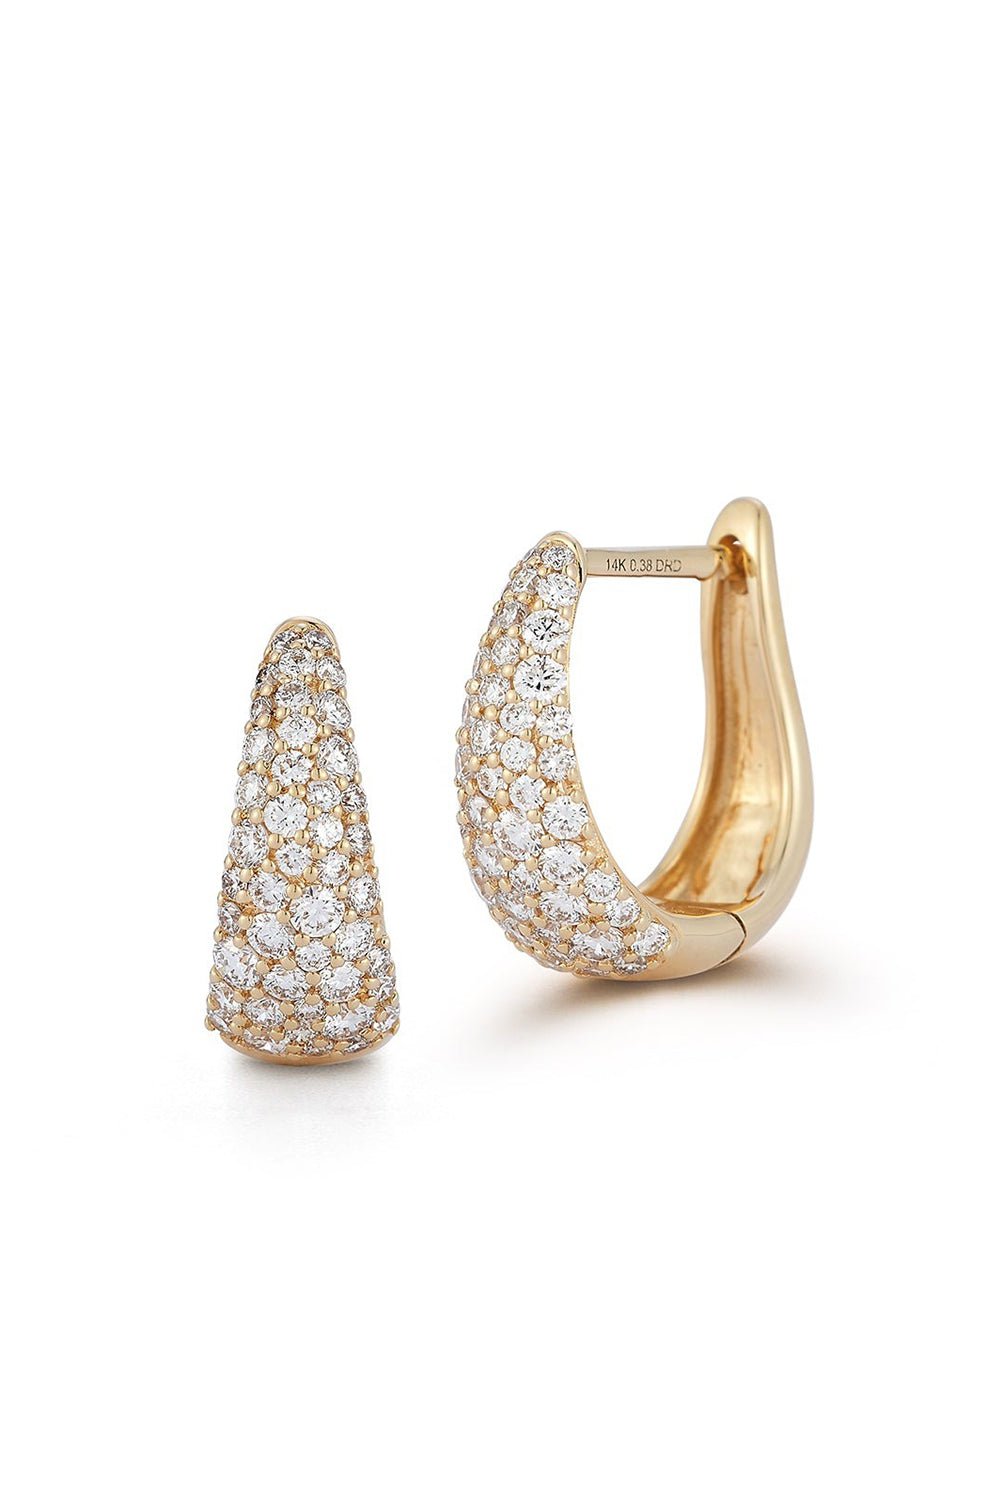 DANA REBECCA DESIGNS-DRD Large Tapered Hoop Earrings-YELLOW GOLD